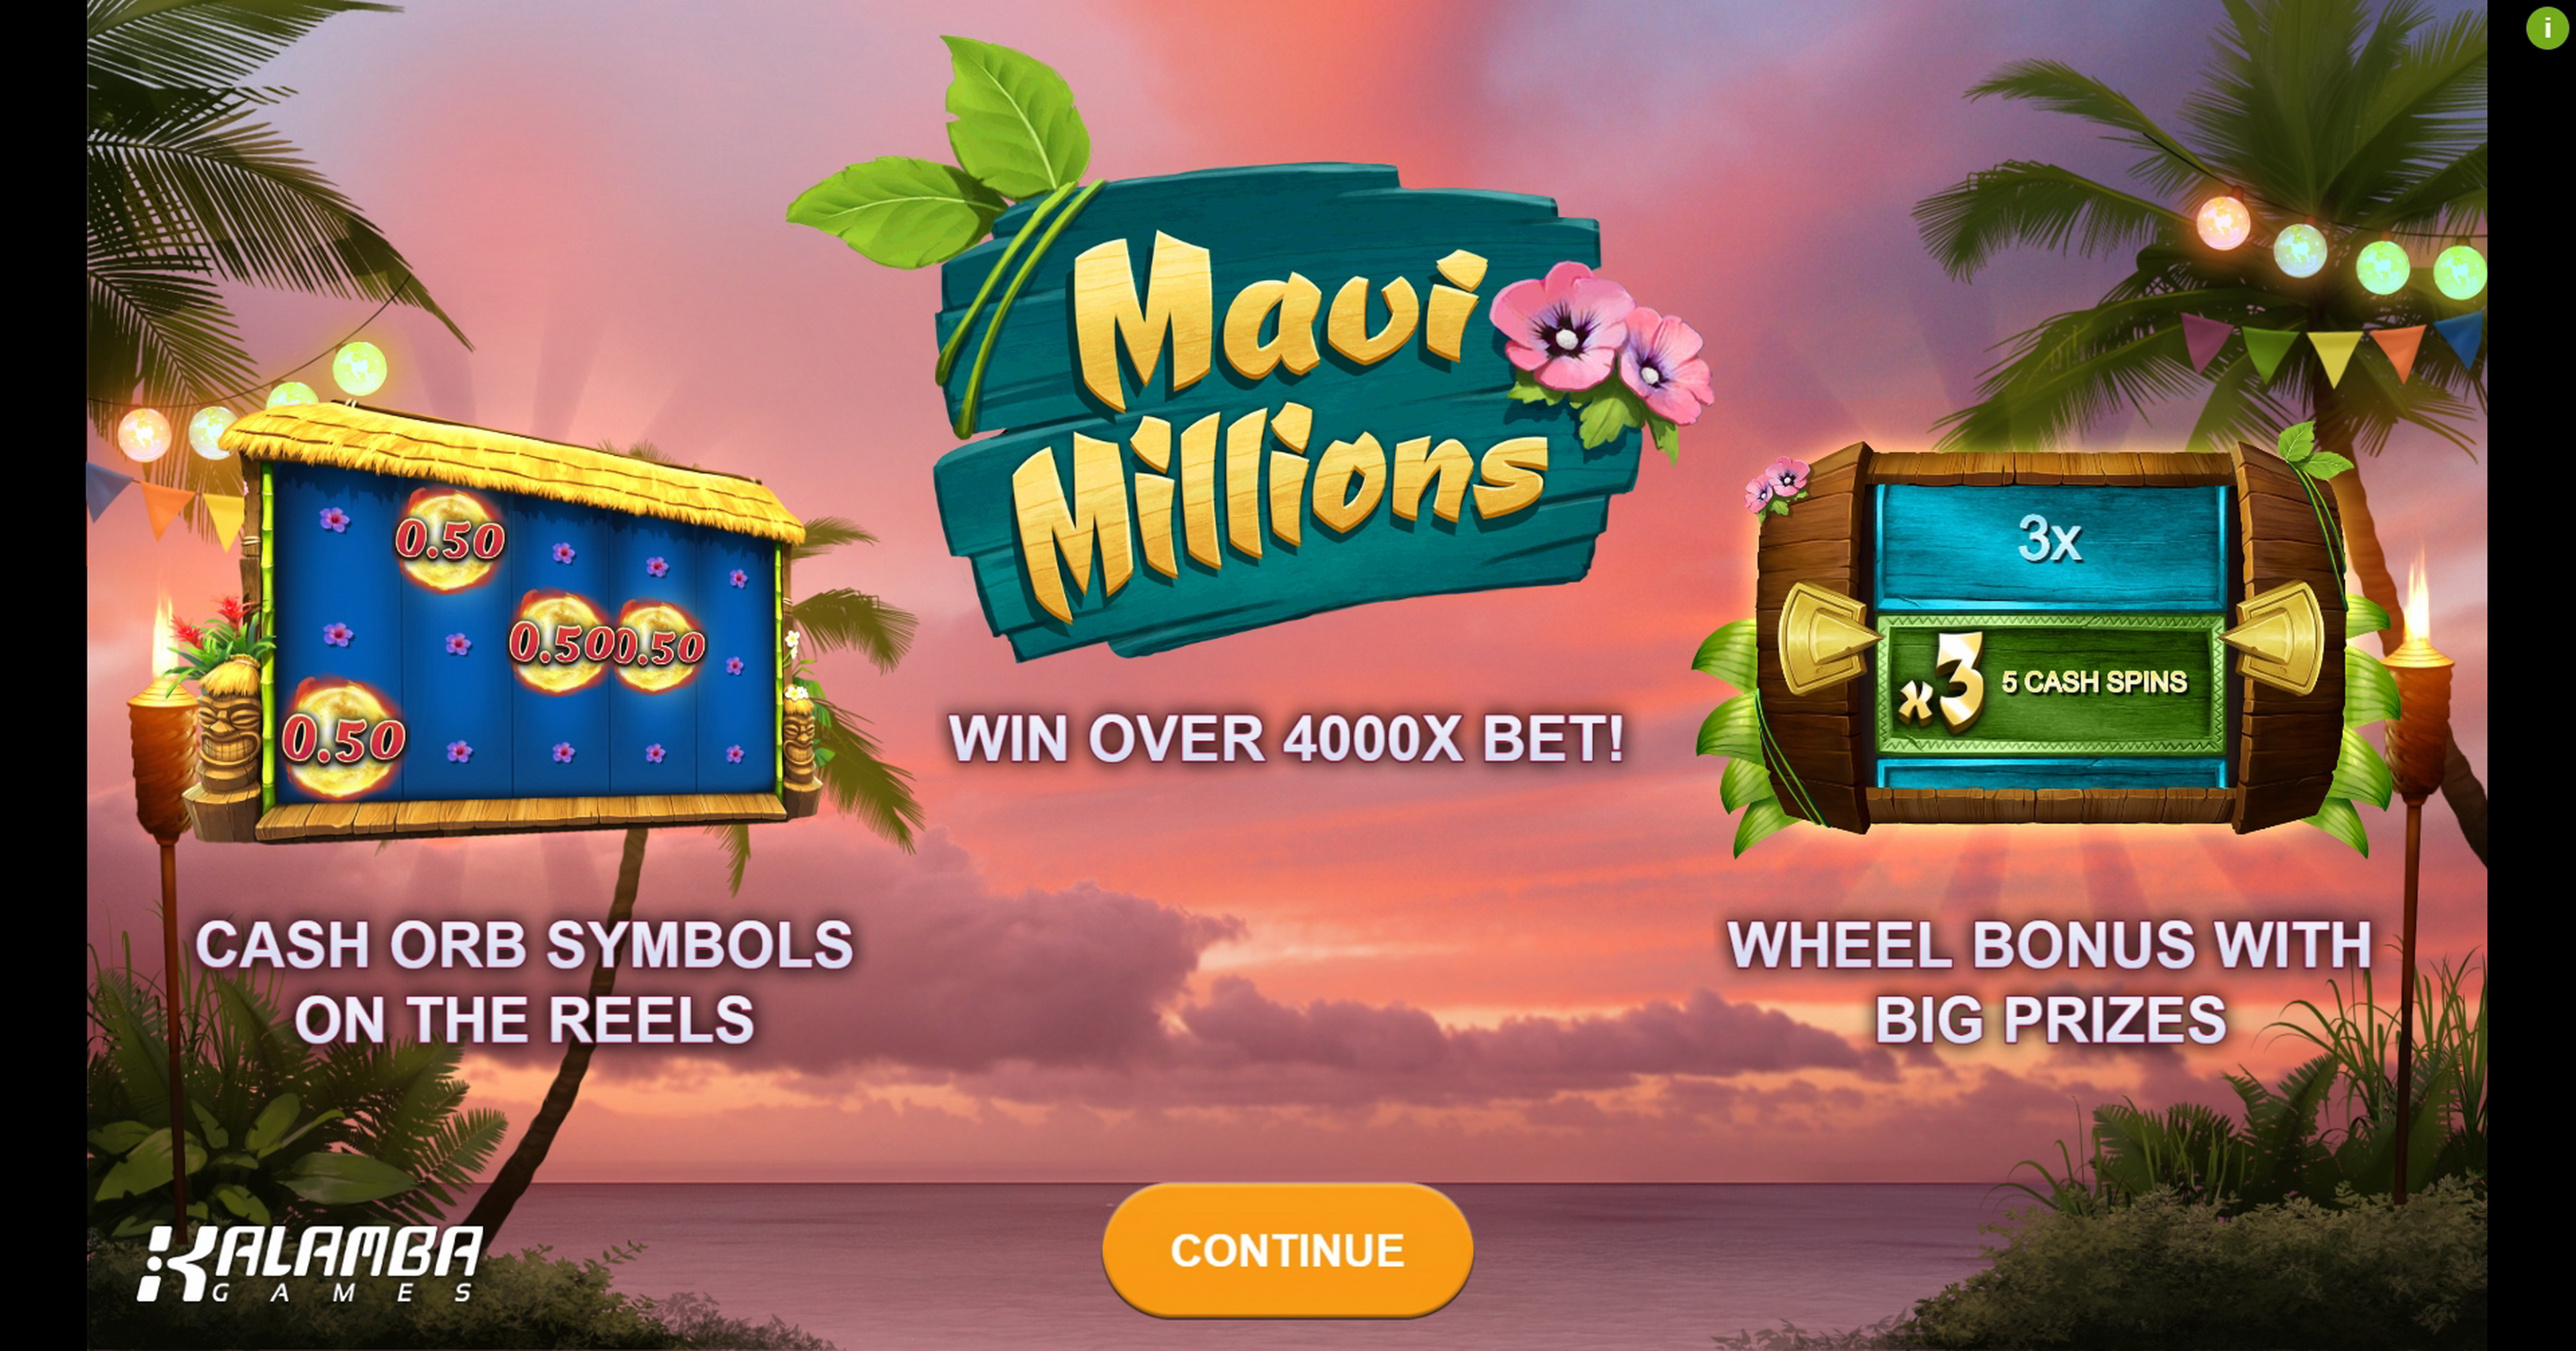 Play Maui Millions Free Casino Slot Game by Kalamba Games